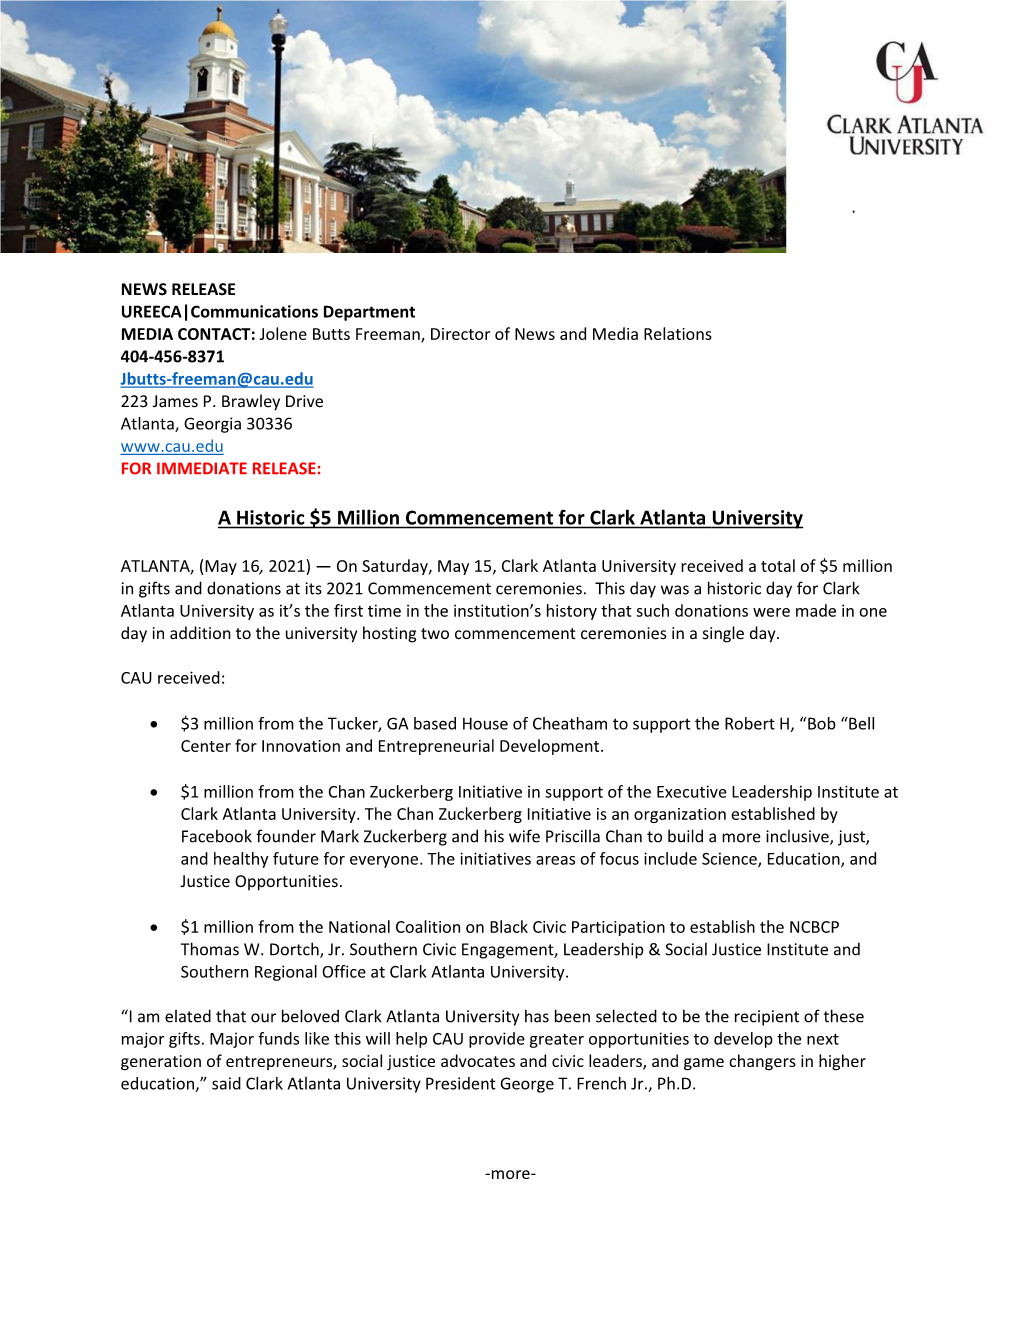 A Historic $5 Million Commencement for Clark Atlanta University